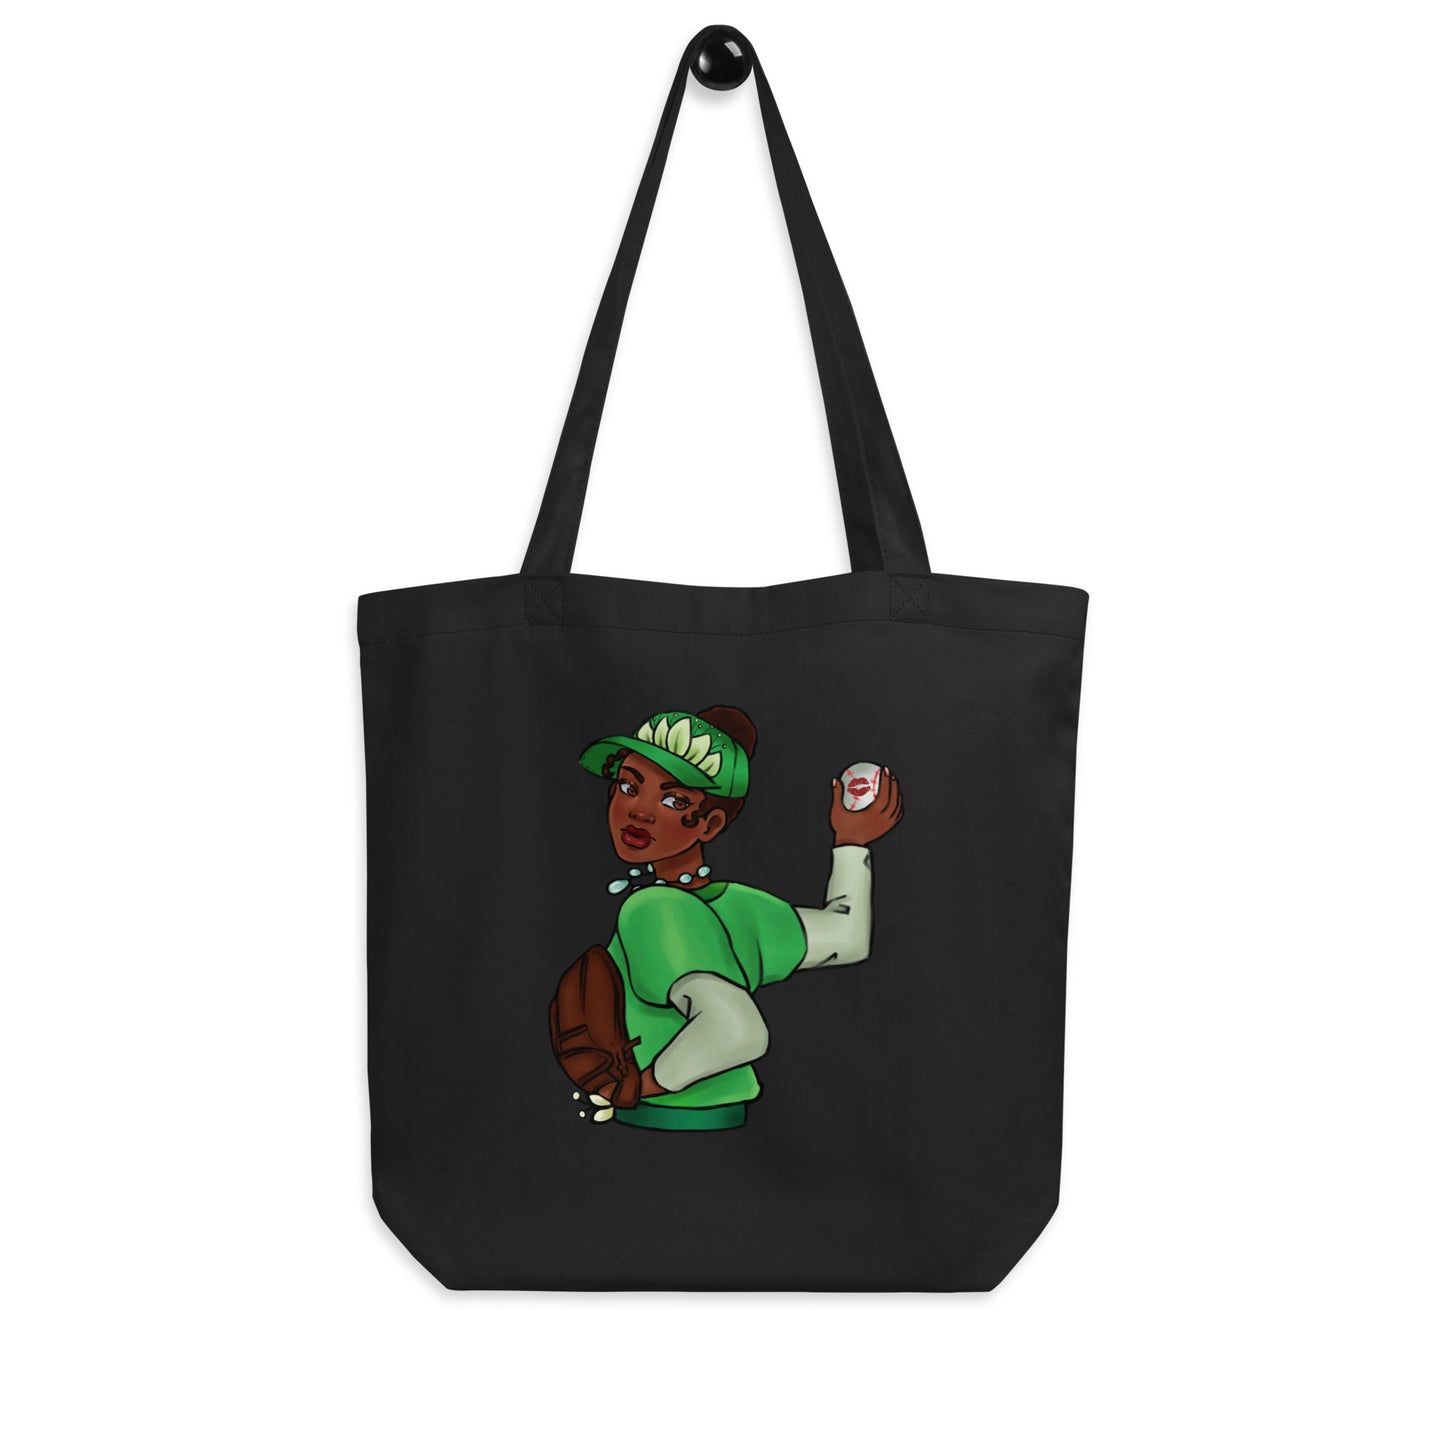 Tiana Inspired - Eco Tote Bag